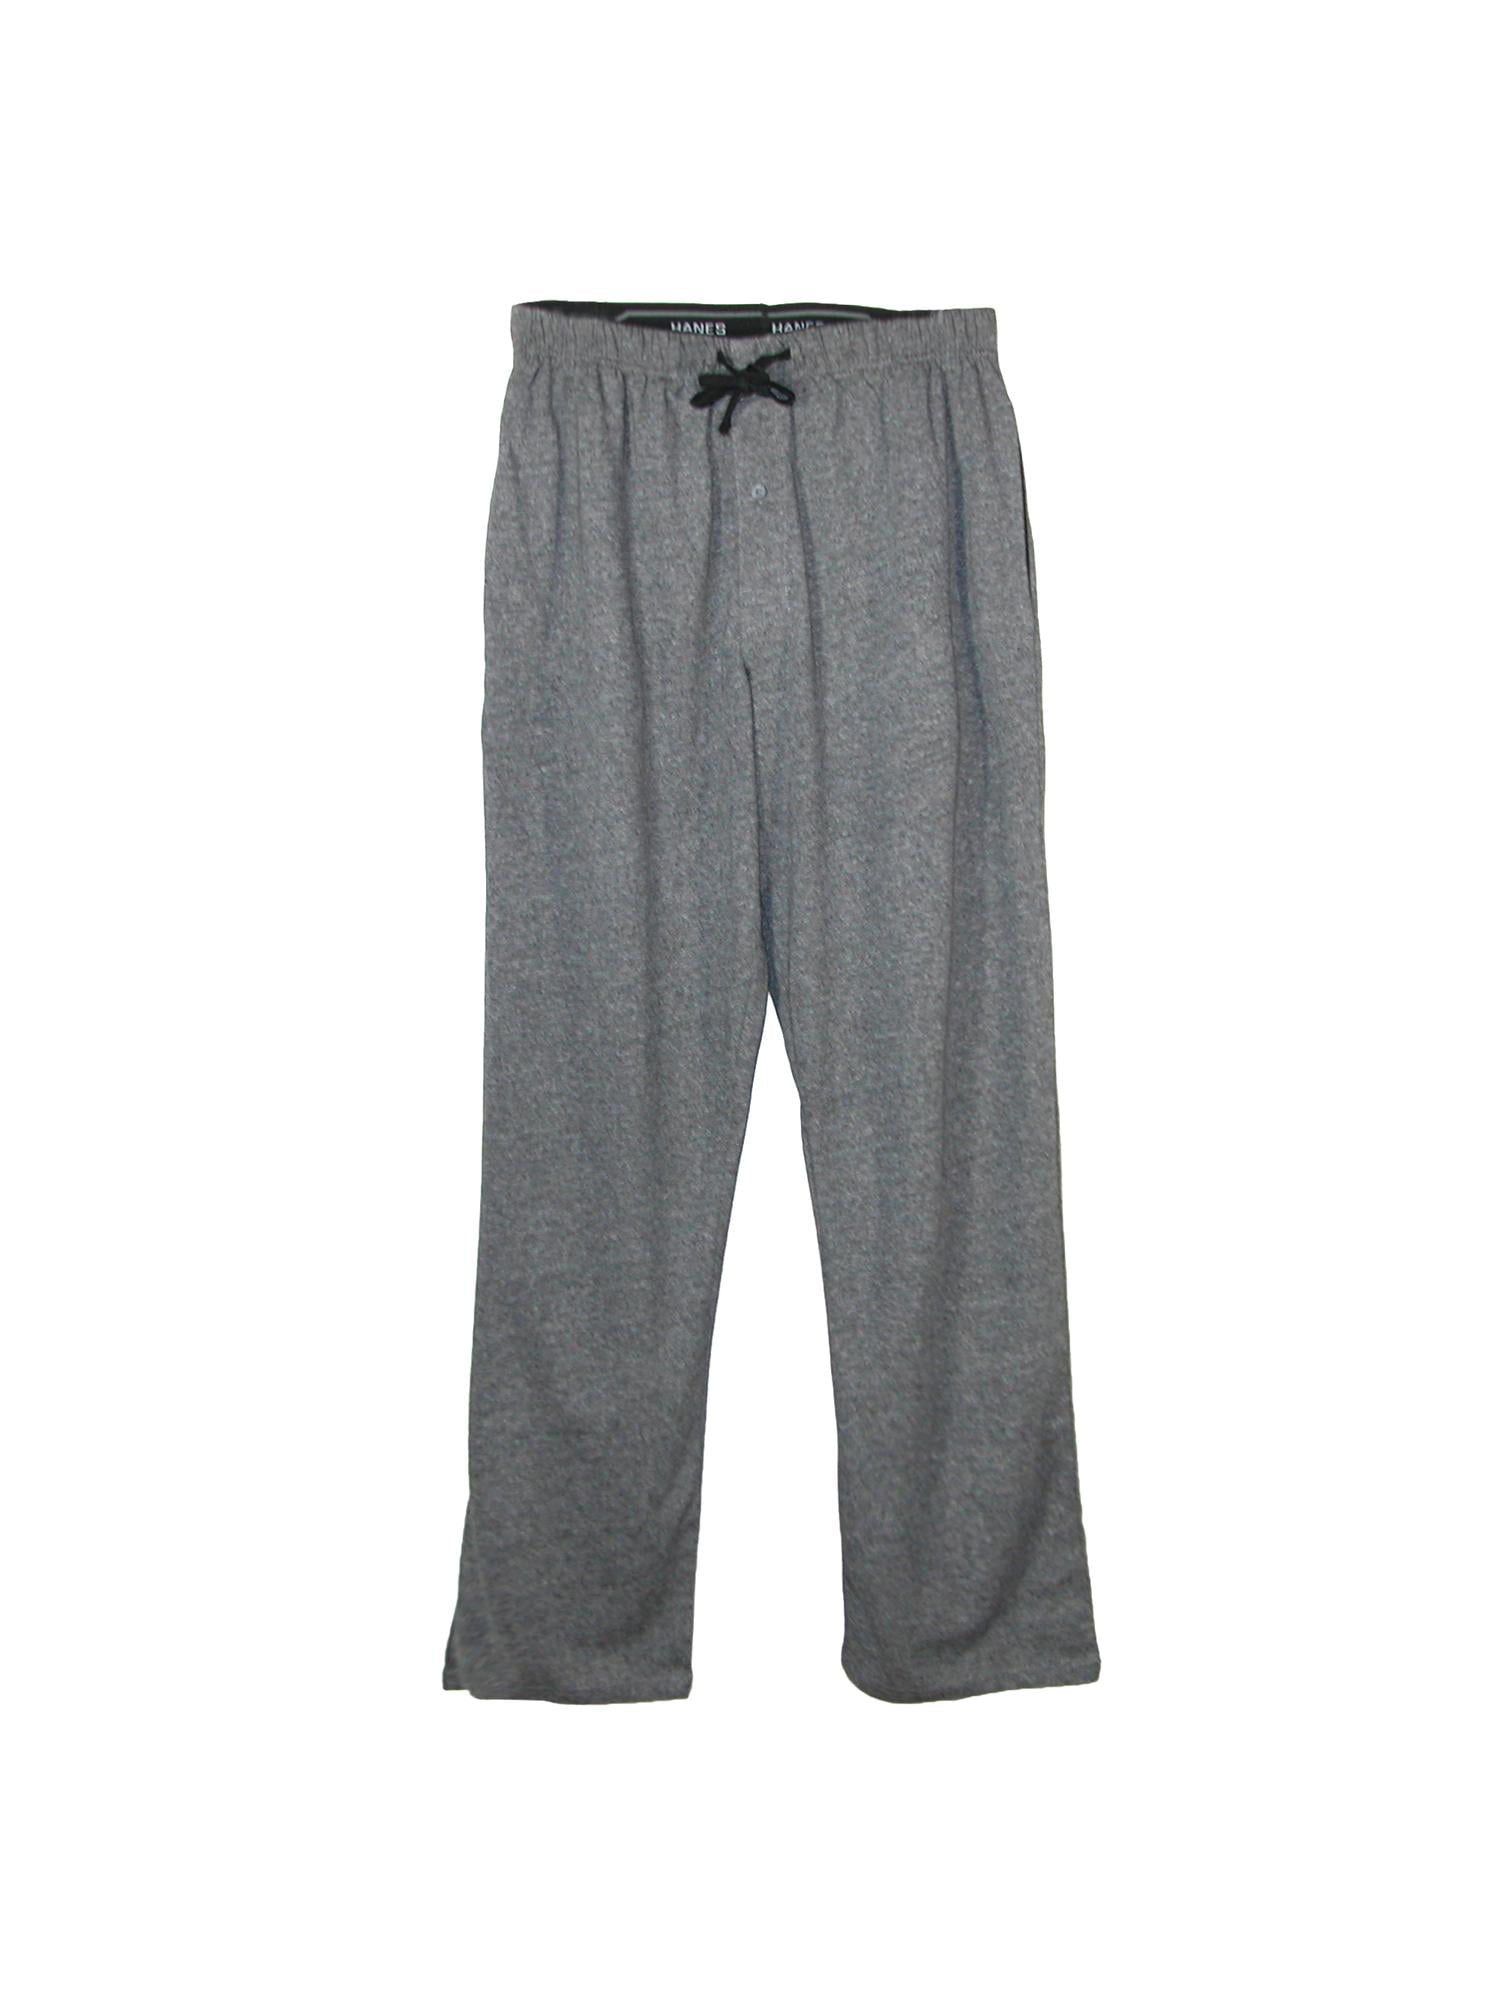 Hanes X Temp Knit Lounge Pajama Pants (Men's) - Walmart.com